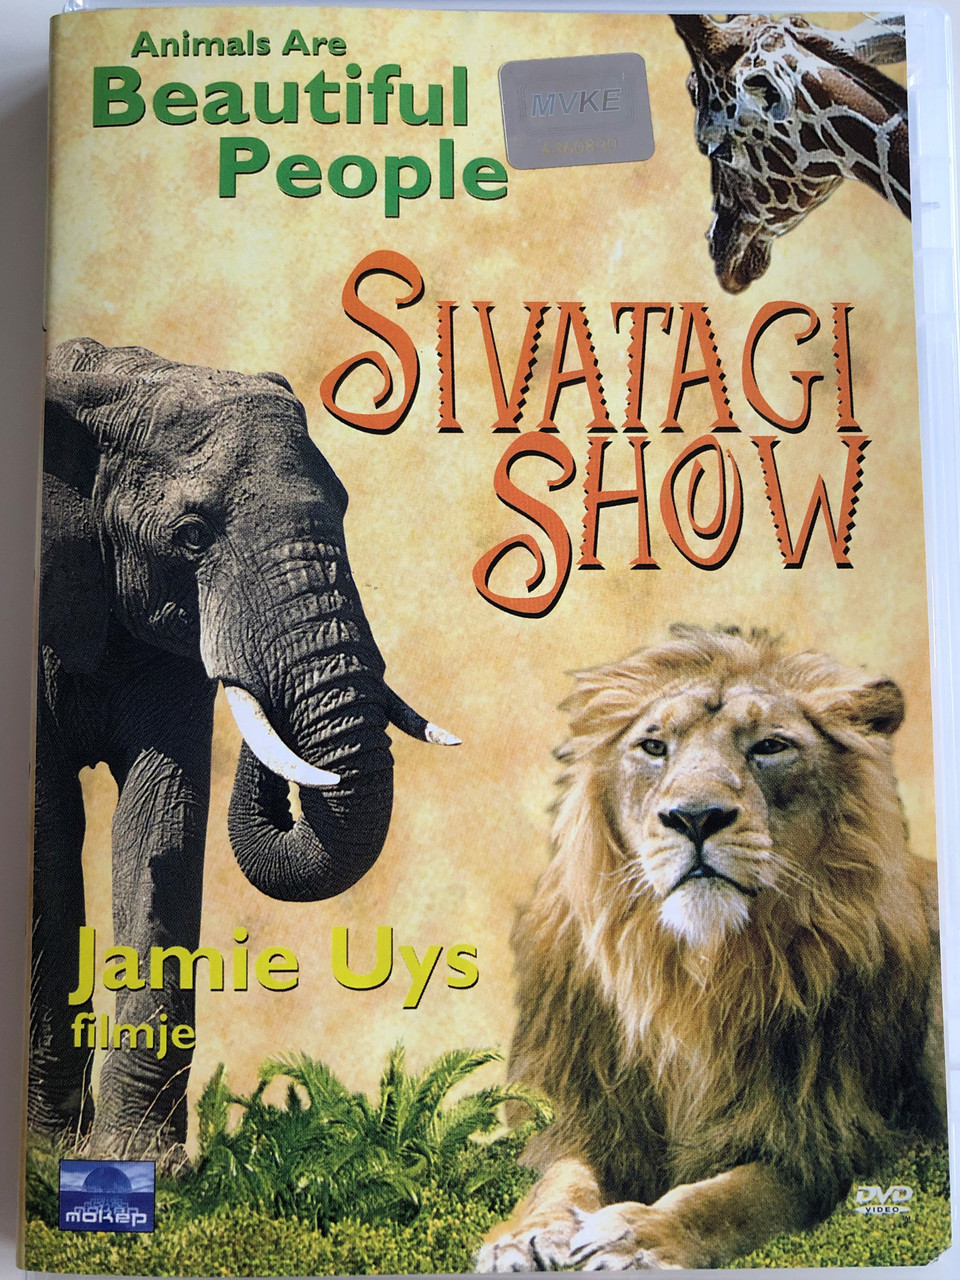 Animals are beautiful people DVD 1974 Sivatagi Show / Directed by Jamie Uys  / South African nature documentary / Aka Beautiful People / Színes  dél-afrikai természetfilm - bibleinmylanguage